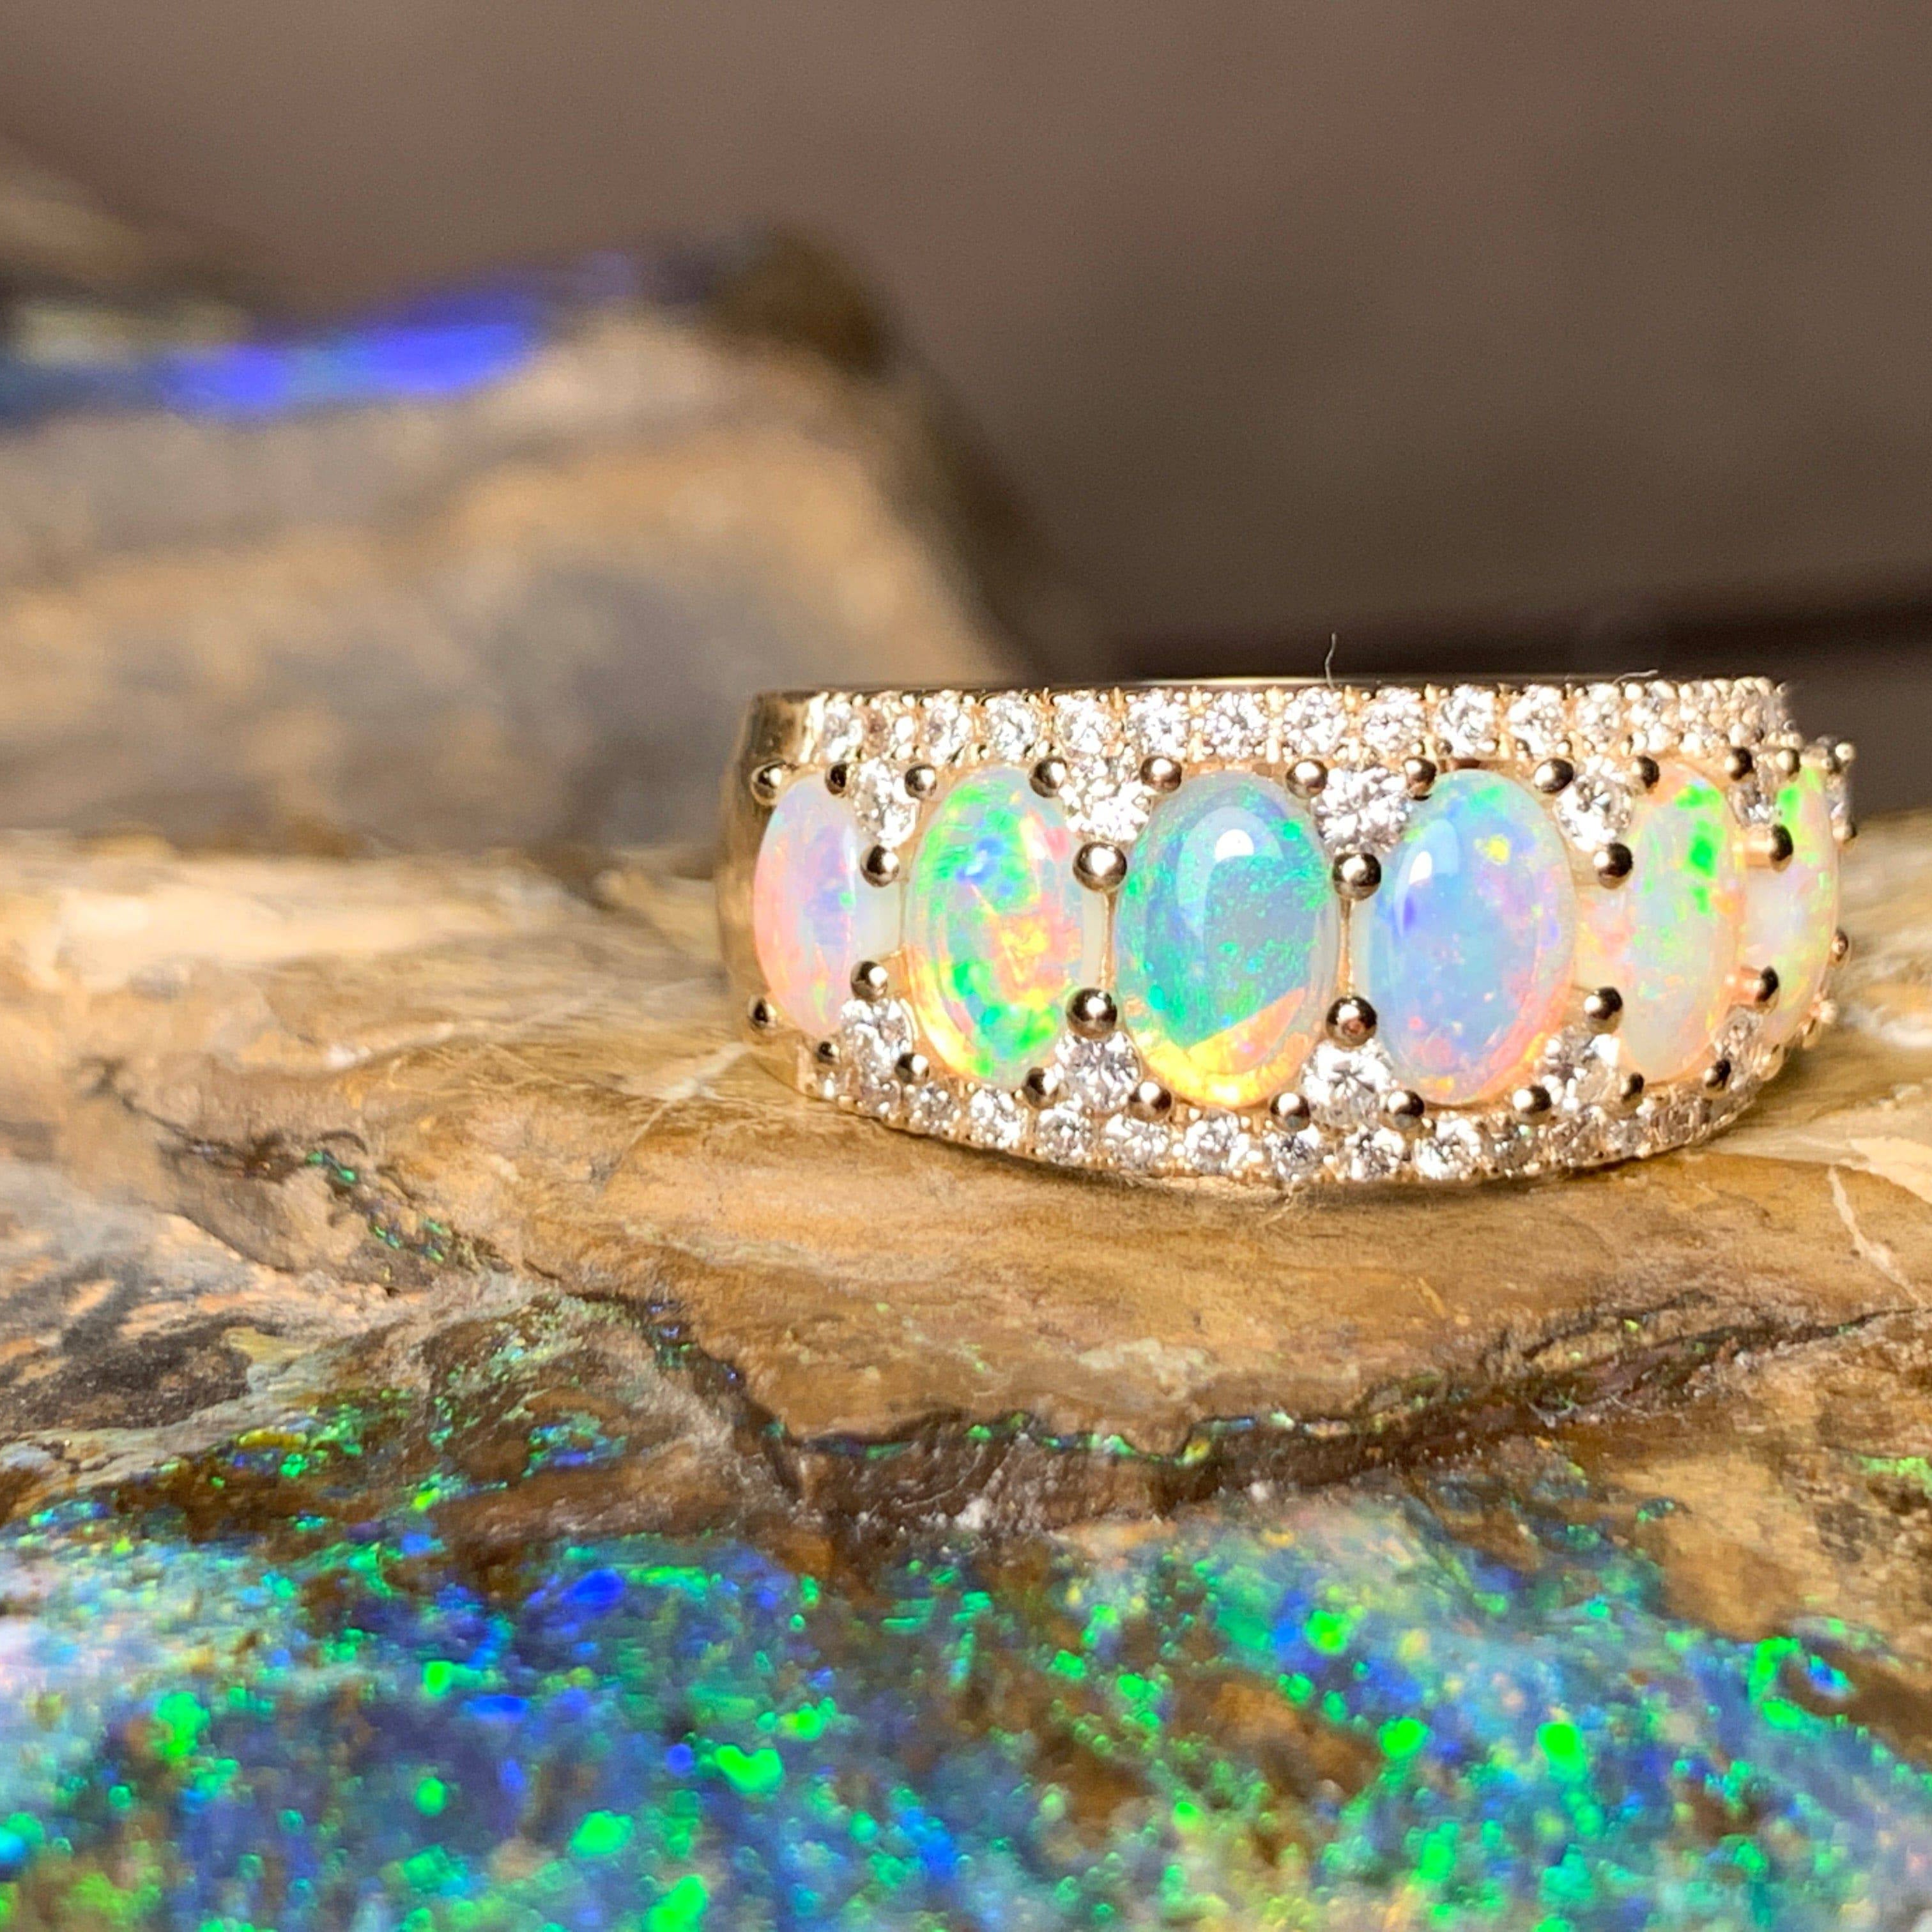 14kt Yellow Gold 3 row eternity ring - Masterpiece Jewellery Opal & Gems Sydney Australia | Online Shop